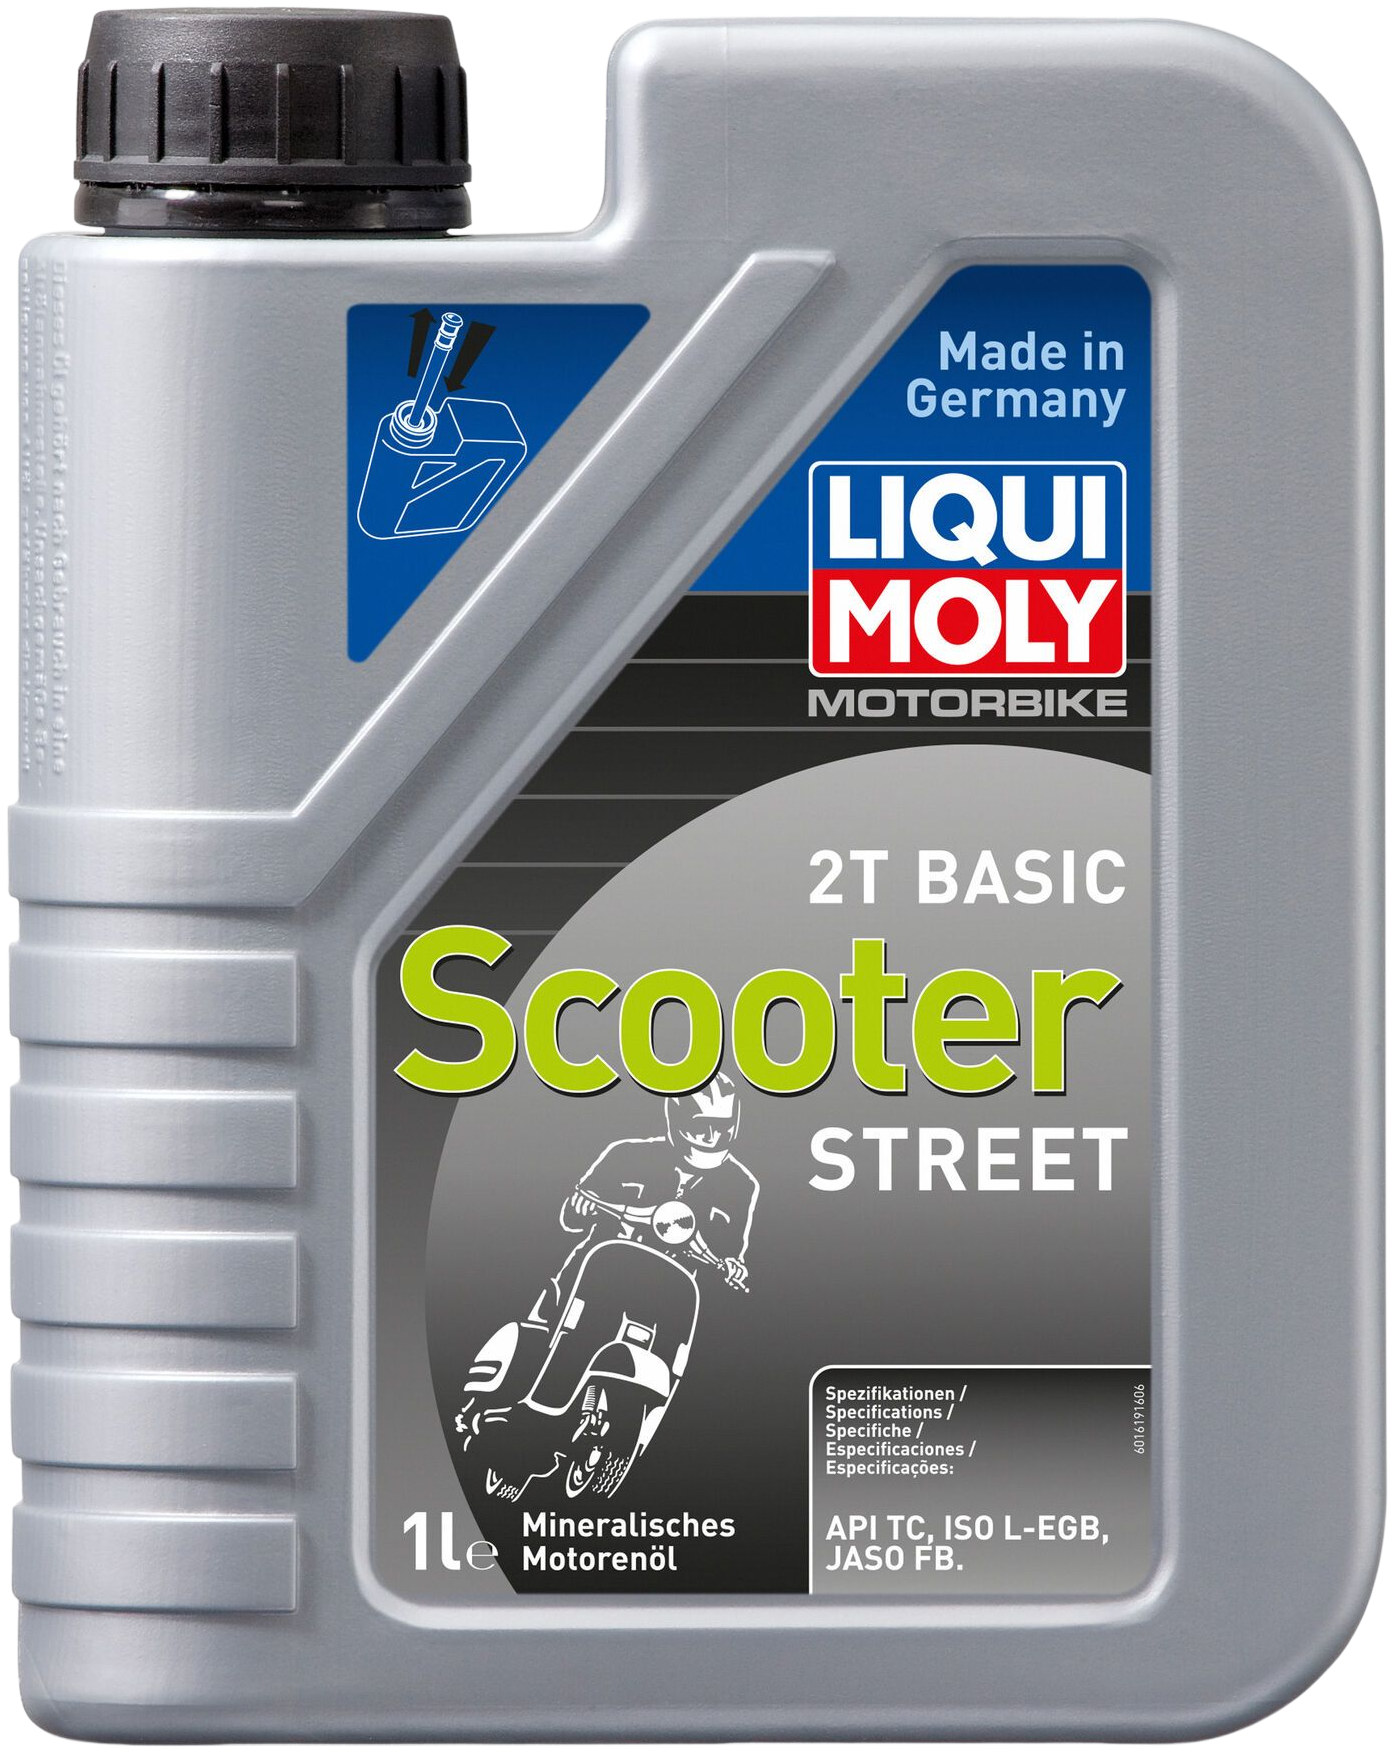 Liqui Moly Motorbike 2T Basic Scooter Street, 6 x 1 lt detail 2